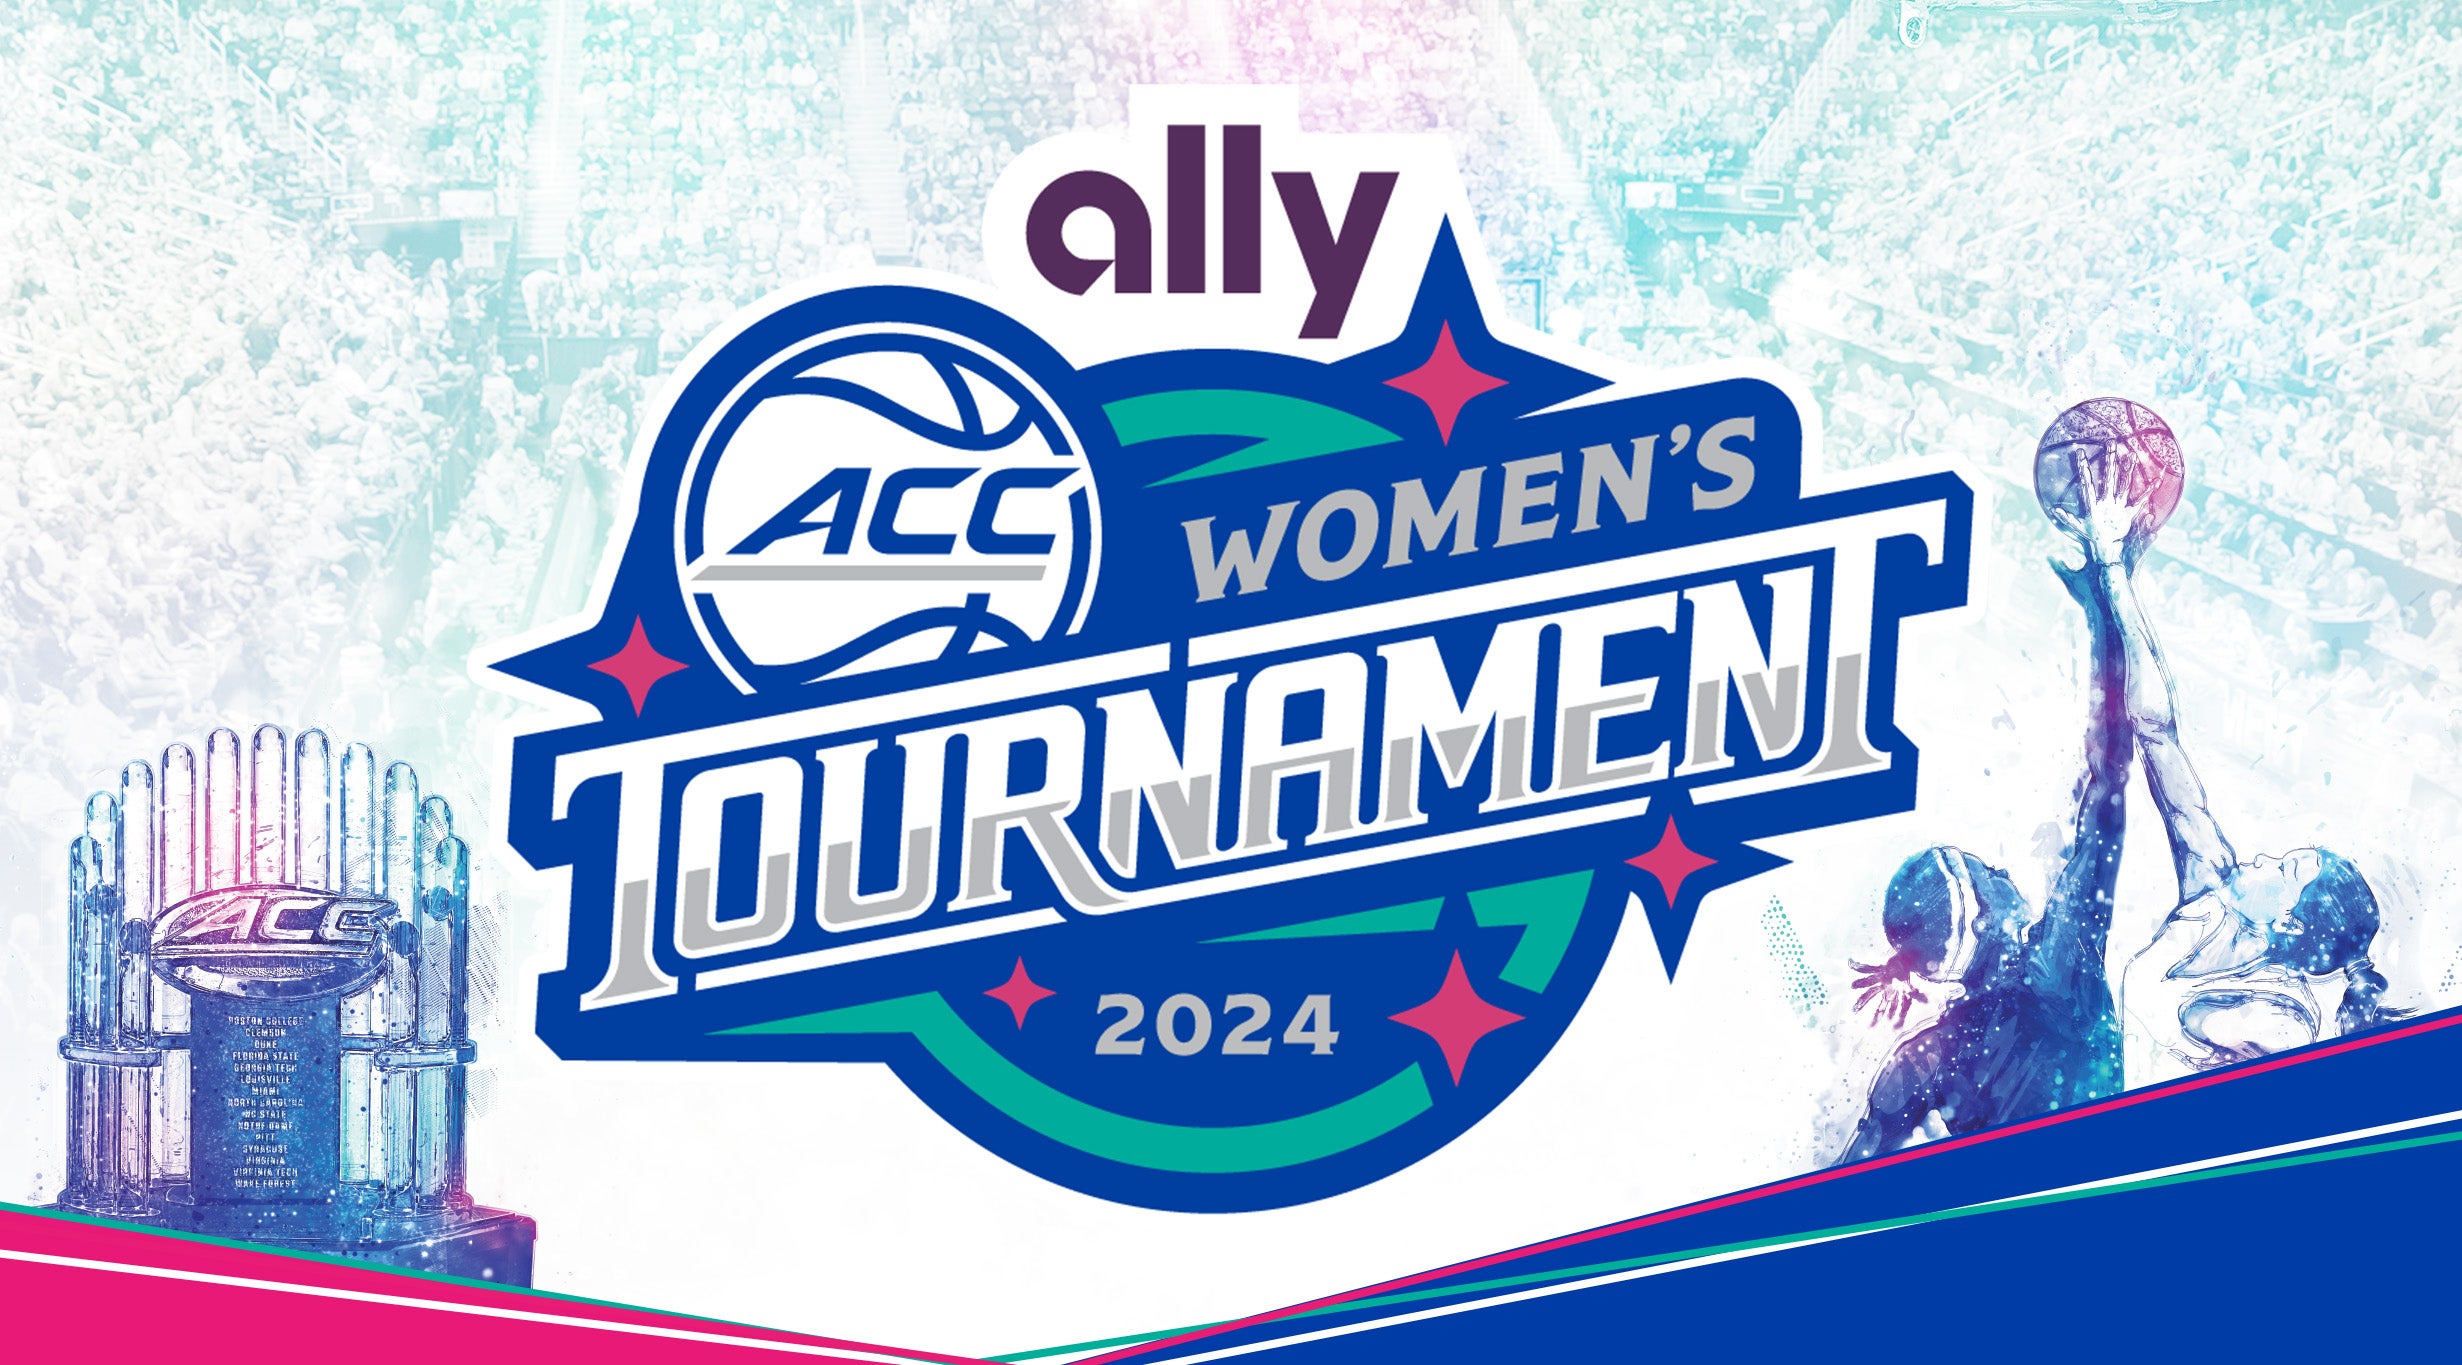 Ally ACC Womens Basketball Tournament Session 1 in Greensboro promo photo for Venue presale offer code